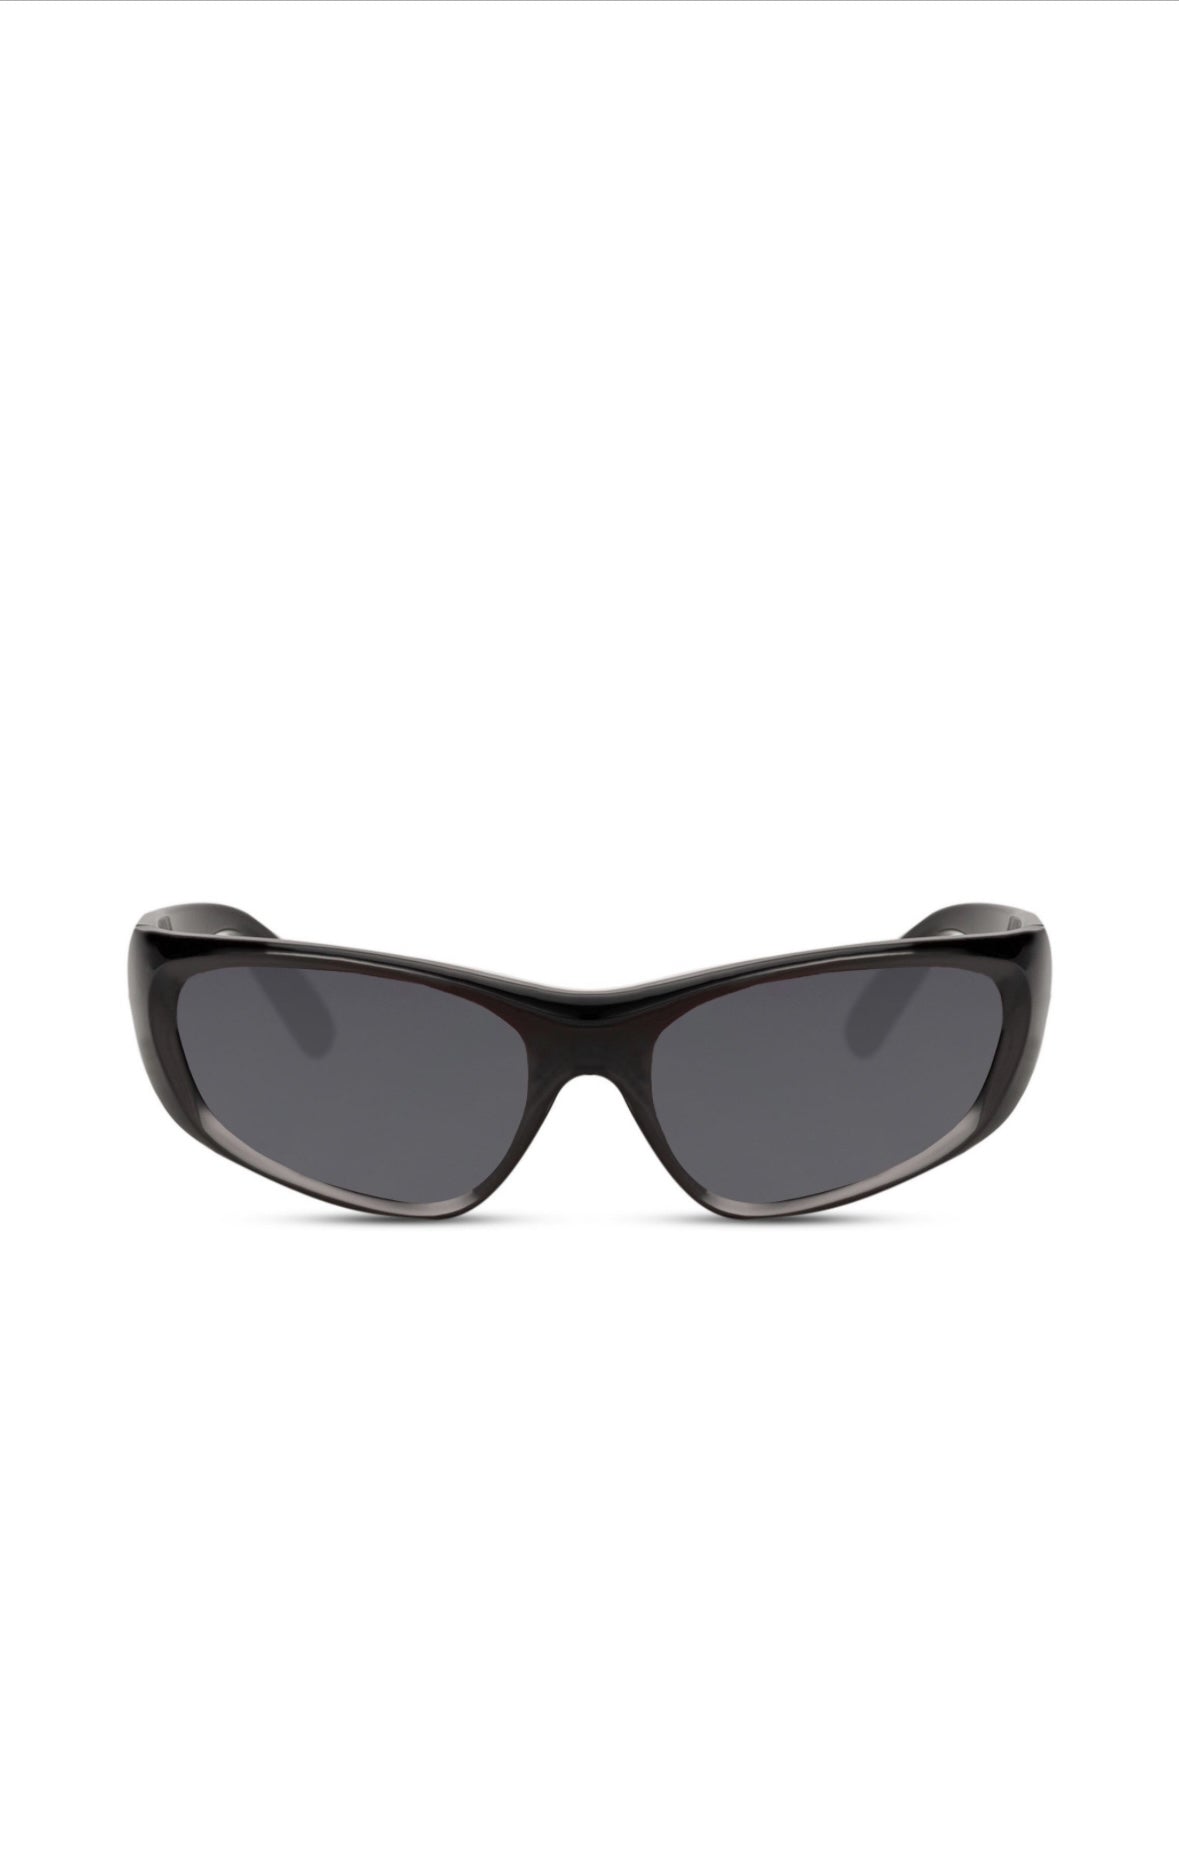 Black “biker” sunglasses